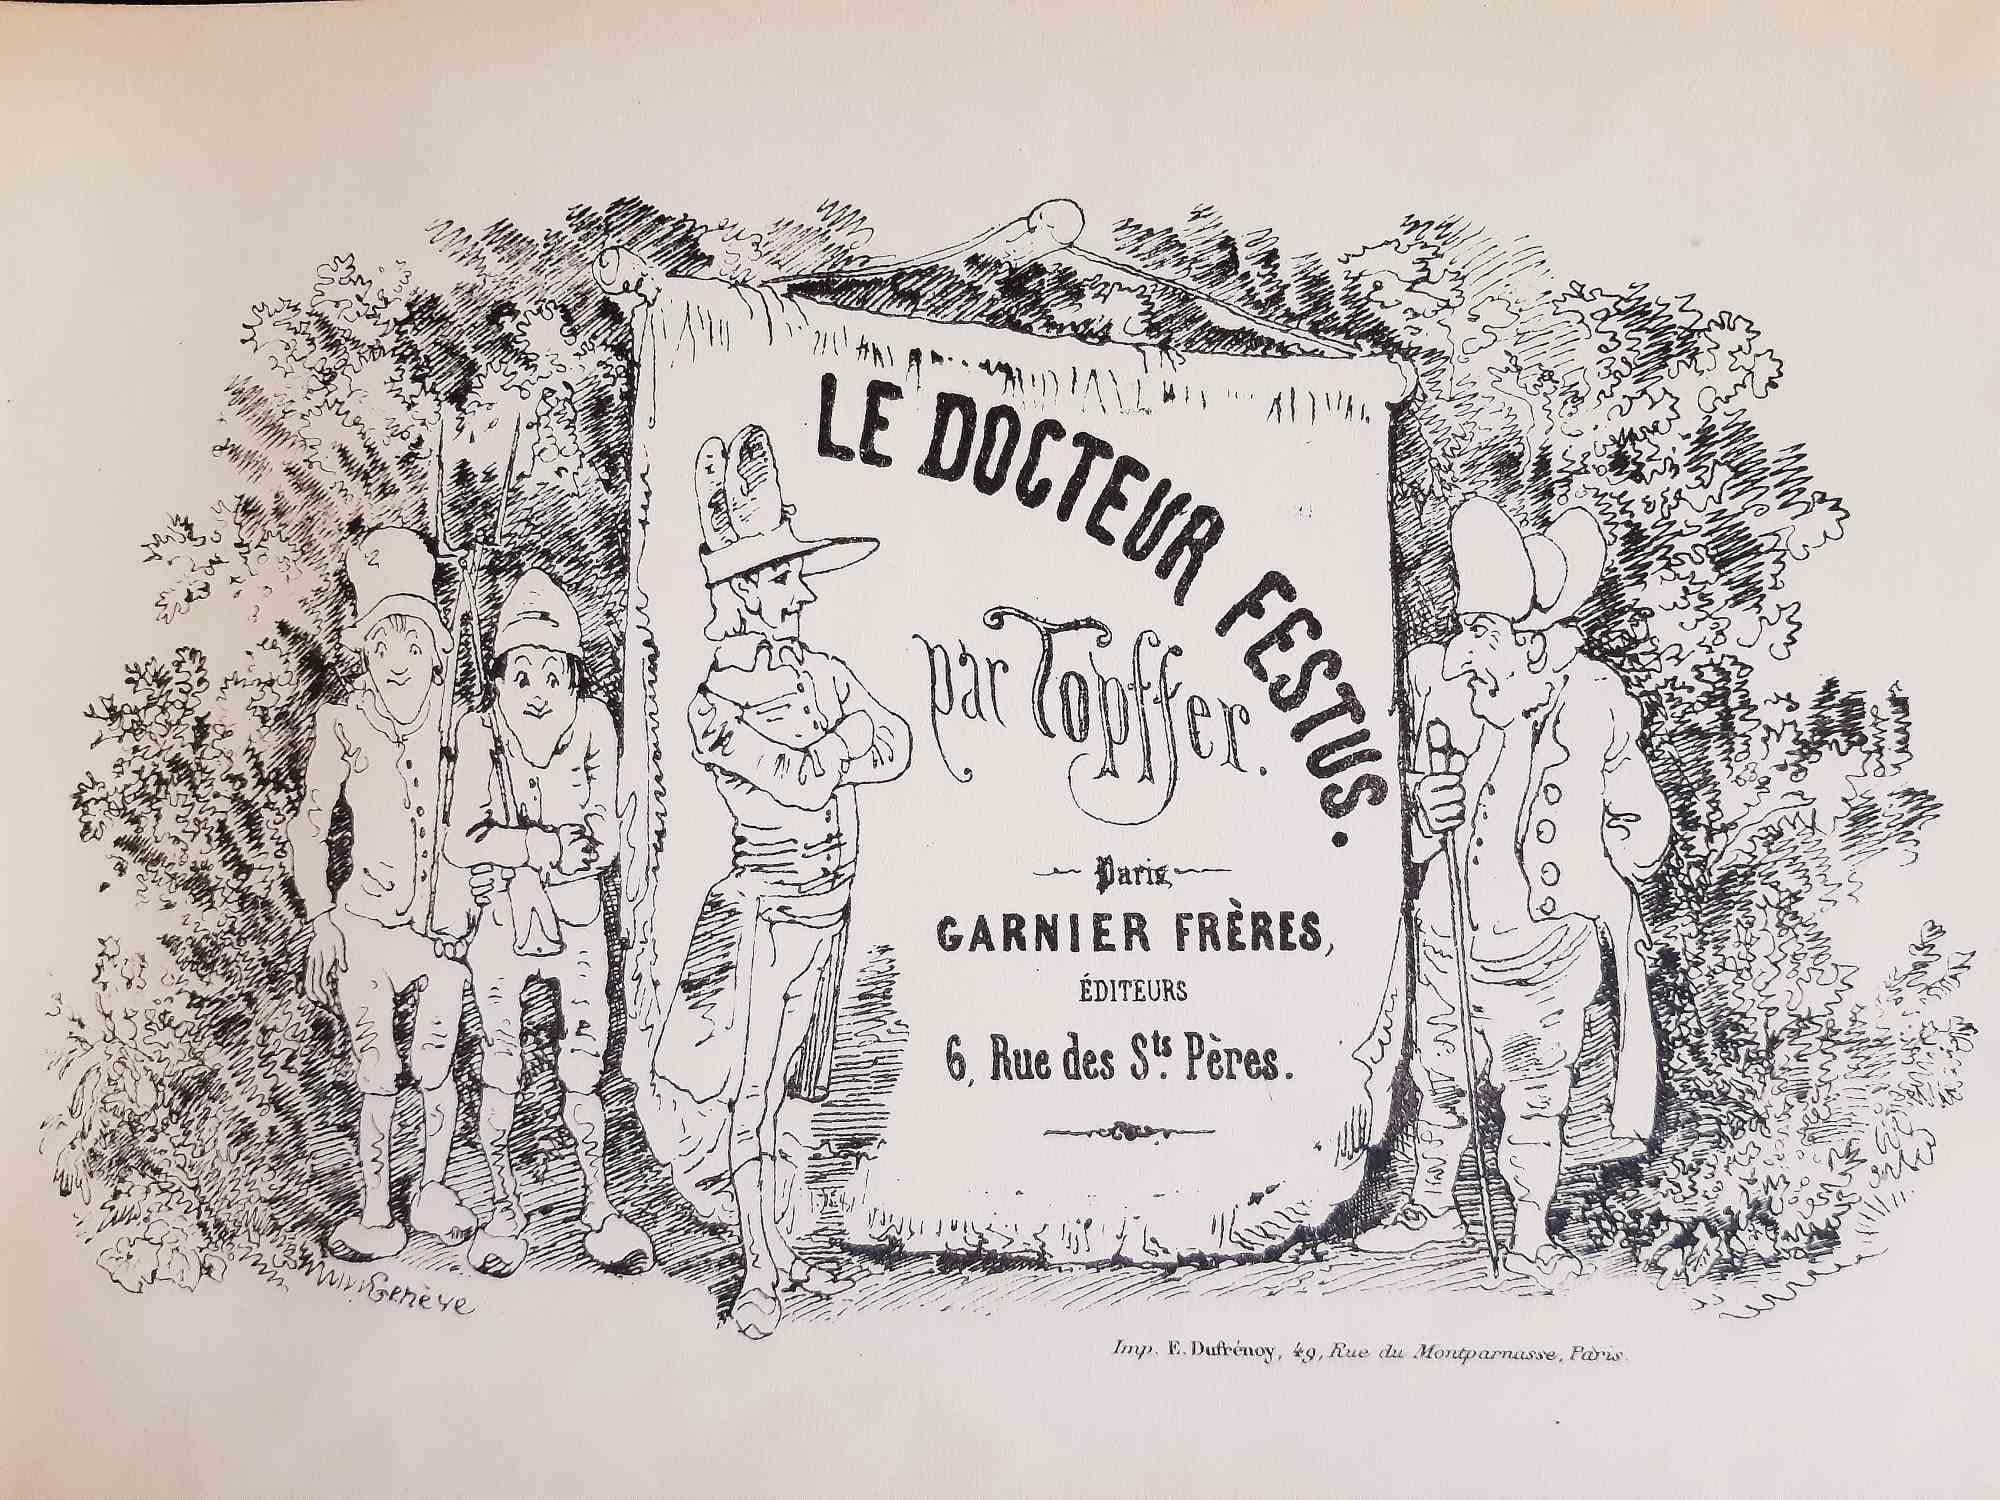 Le Docteur Festus -  Prints by Rodolphe Töpffer -1830s - Art by Rodolphe Topffer